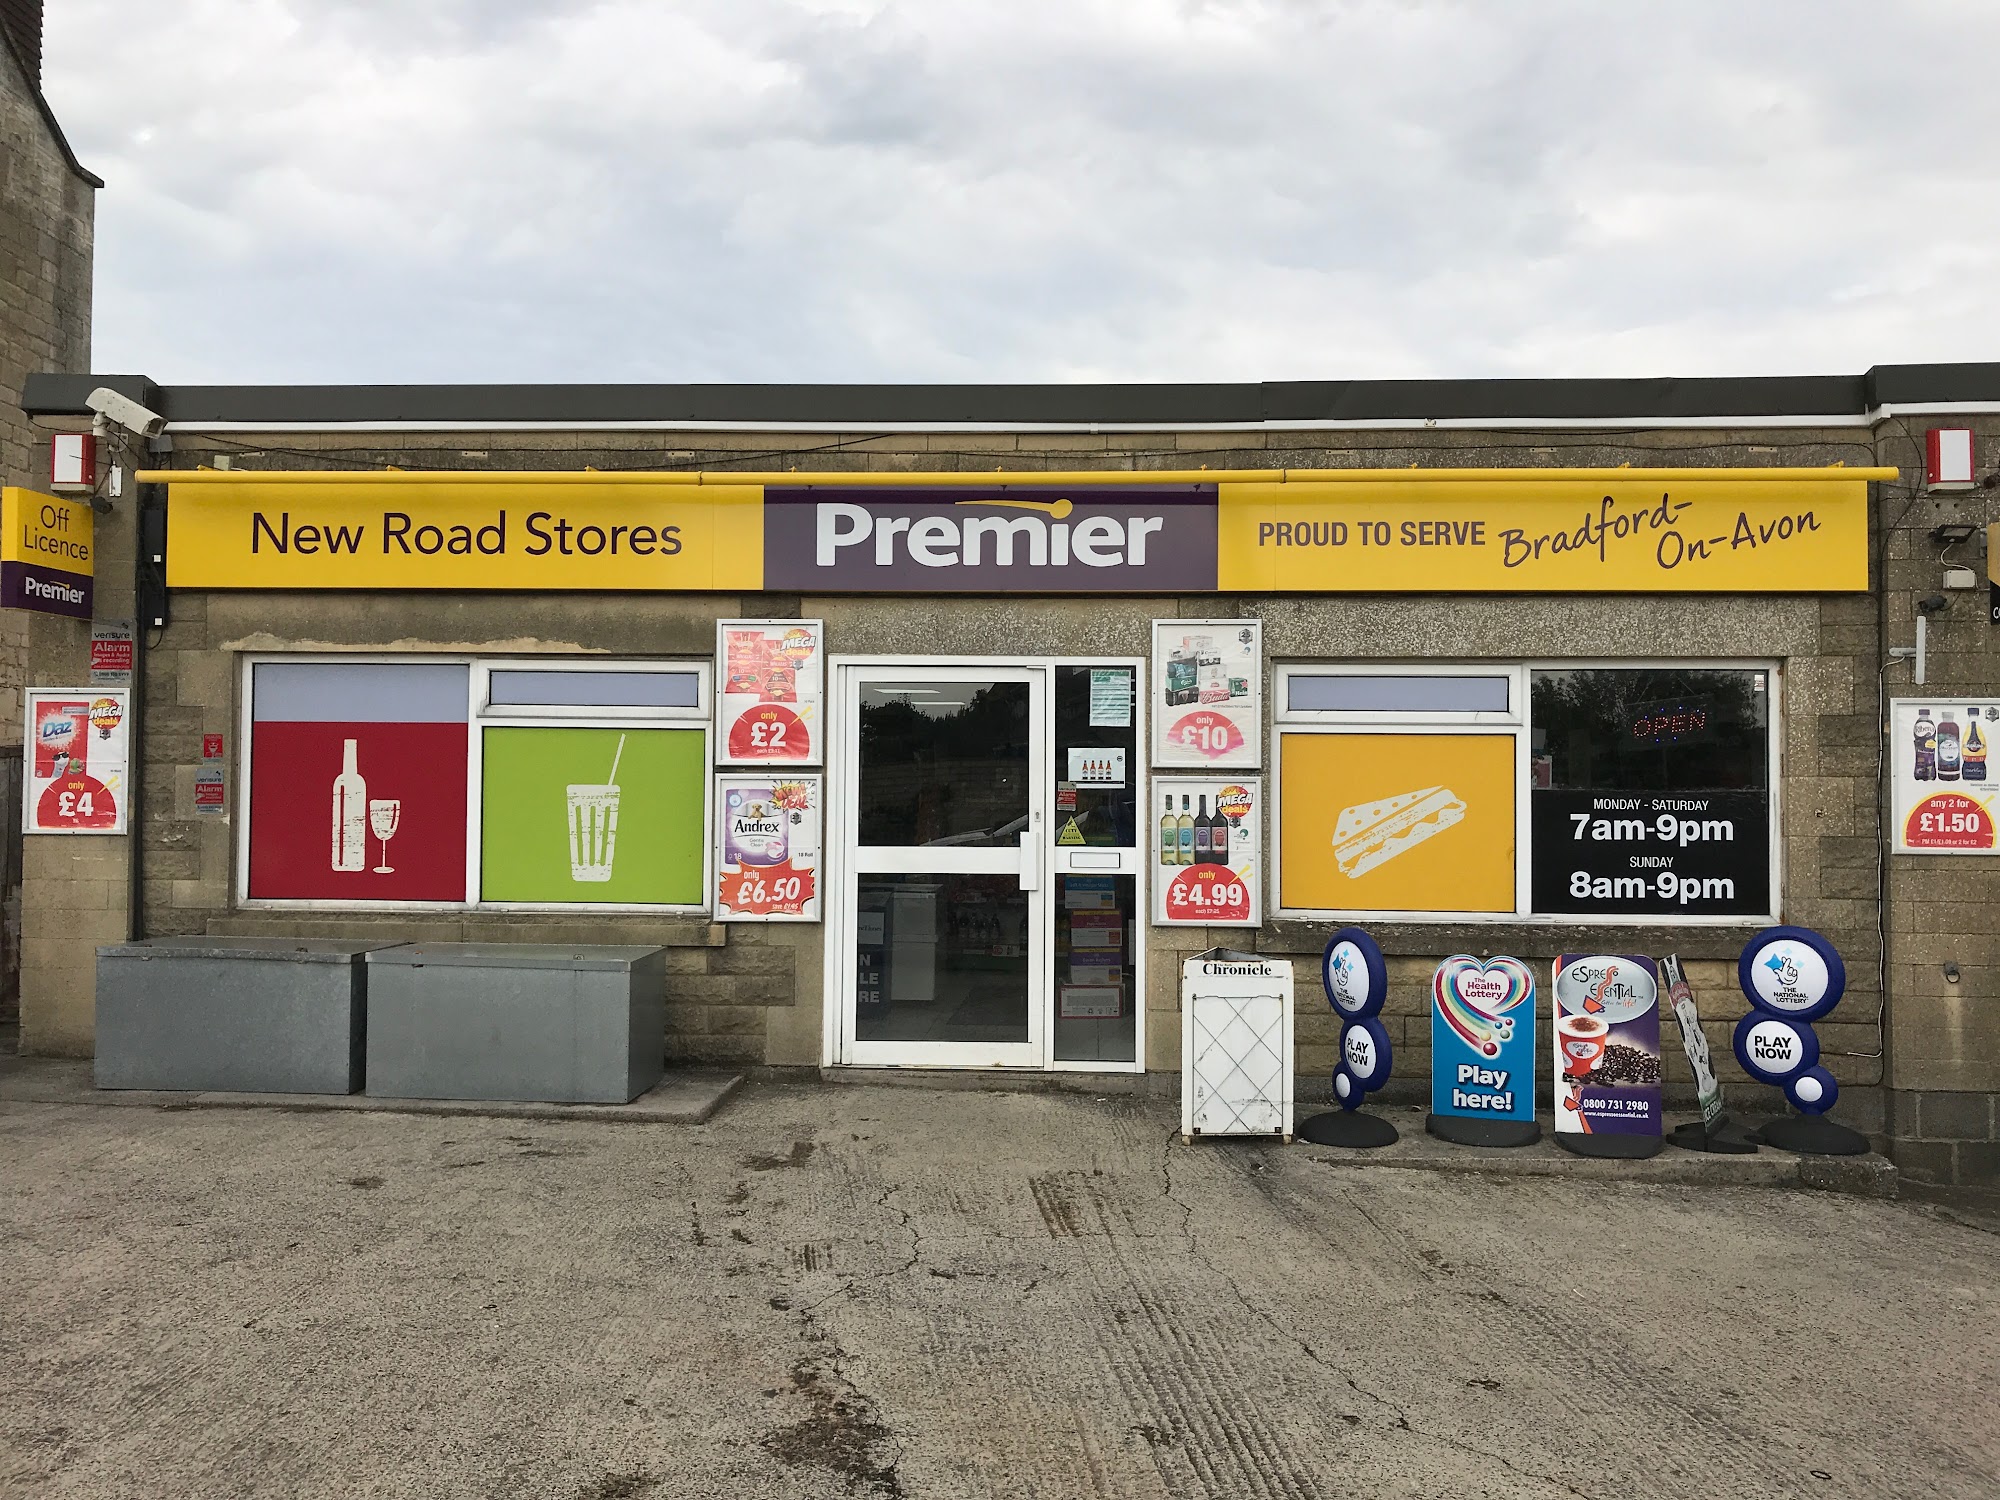 New Road Store & Premier